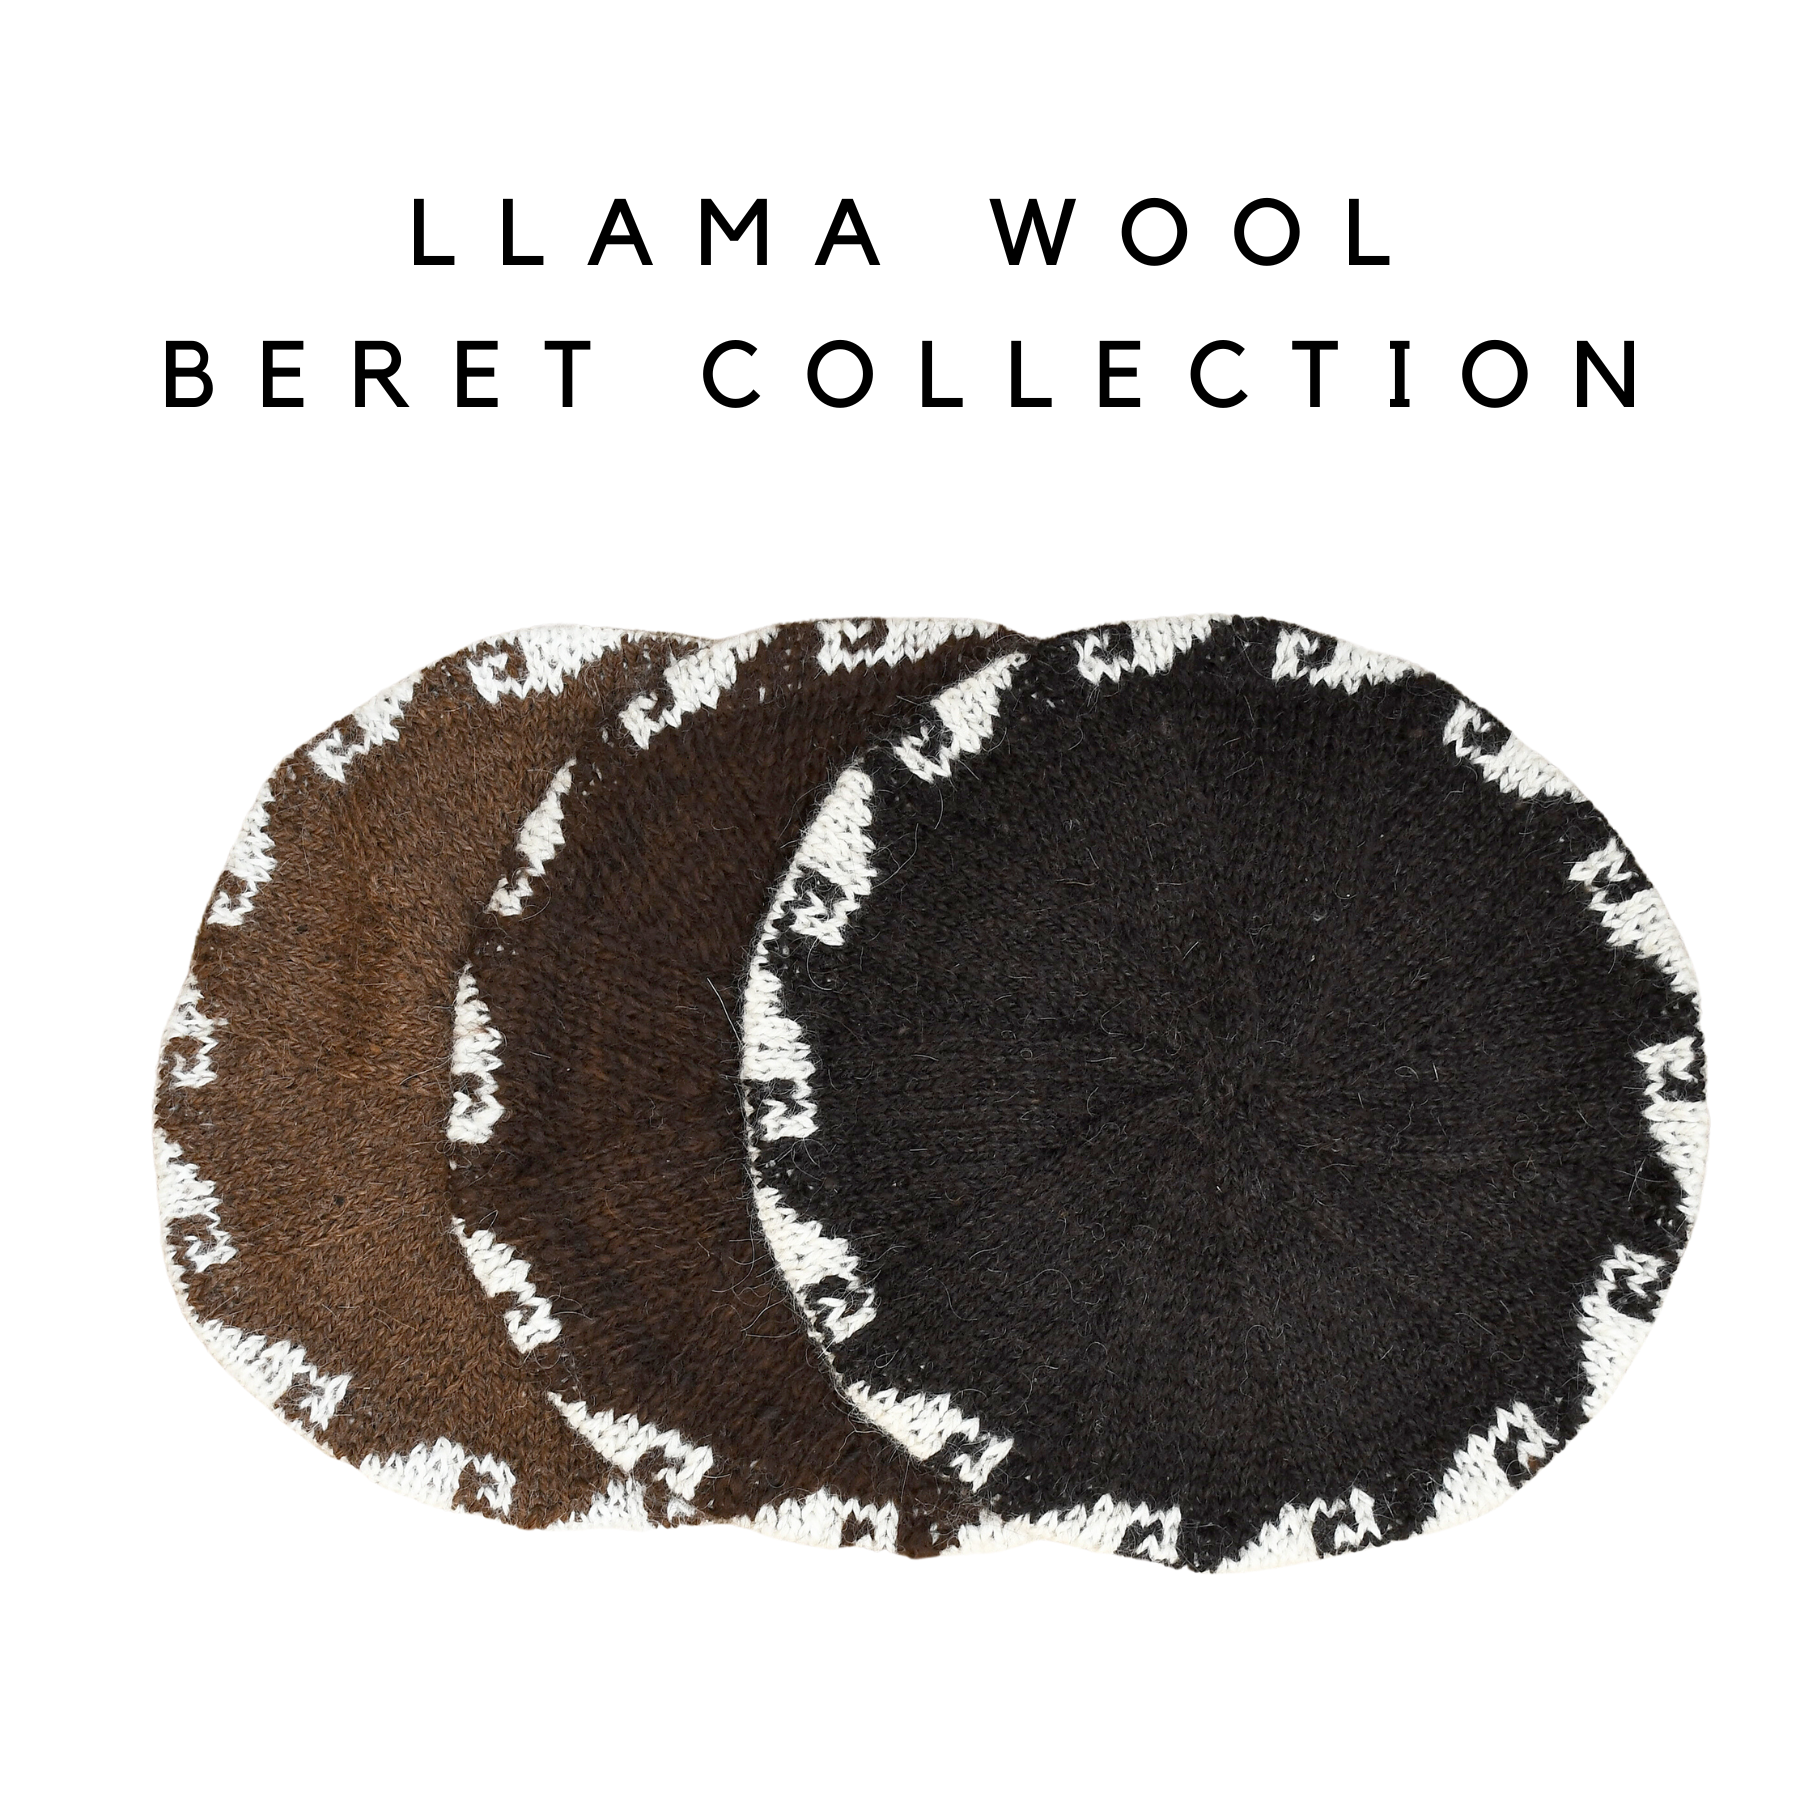 Gaucholife Beret Hand-Knitted Llama Wool Beret